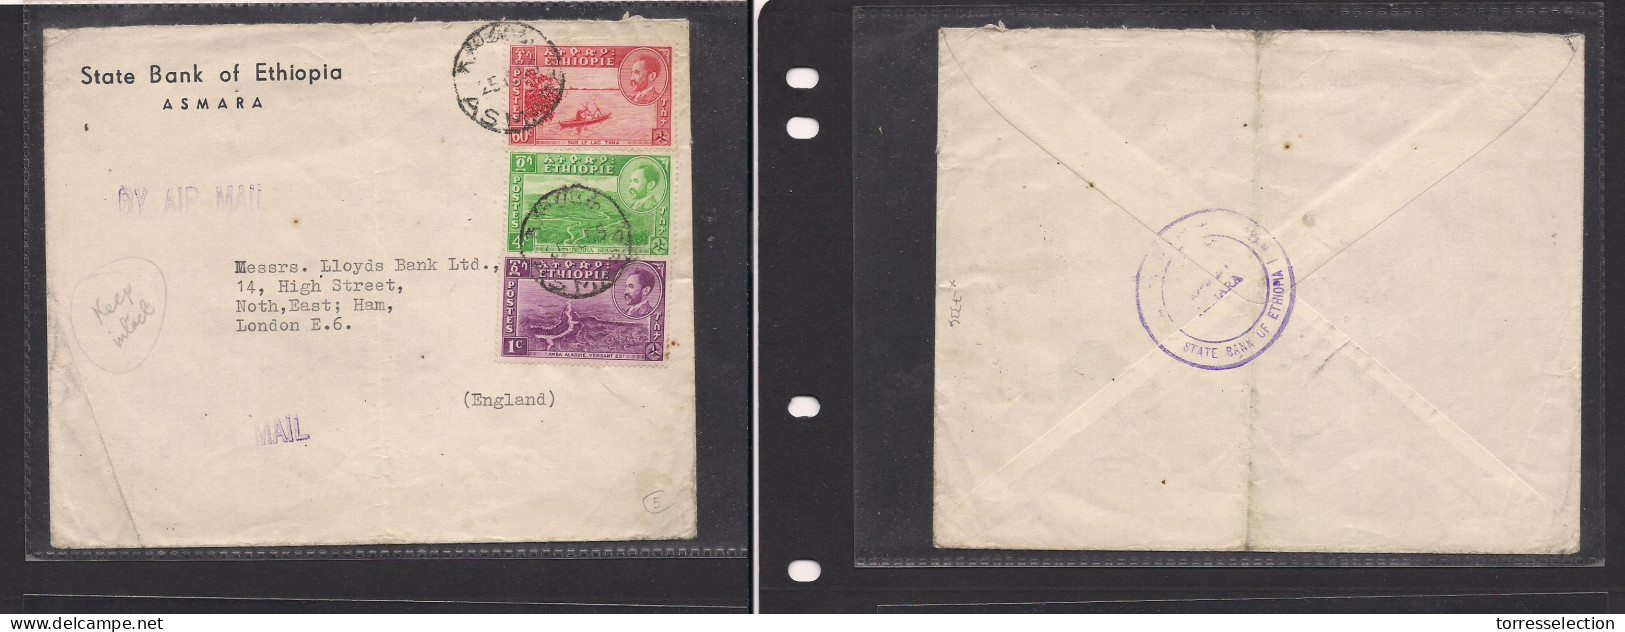 ETHIOPIA. Ethiopia Cover 1955 Asmara To UK Mult Fkd Comercial Env. Easy Deal. XSALE. - Ethiopia